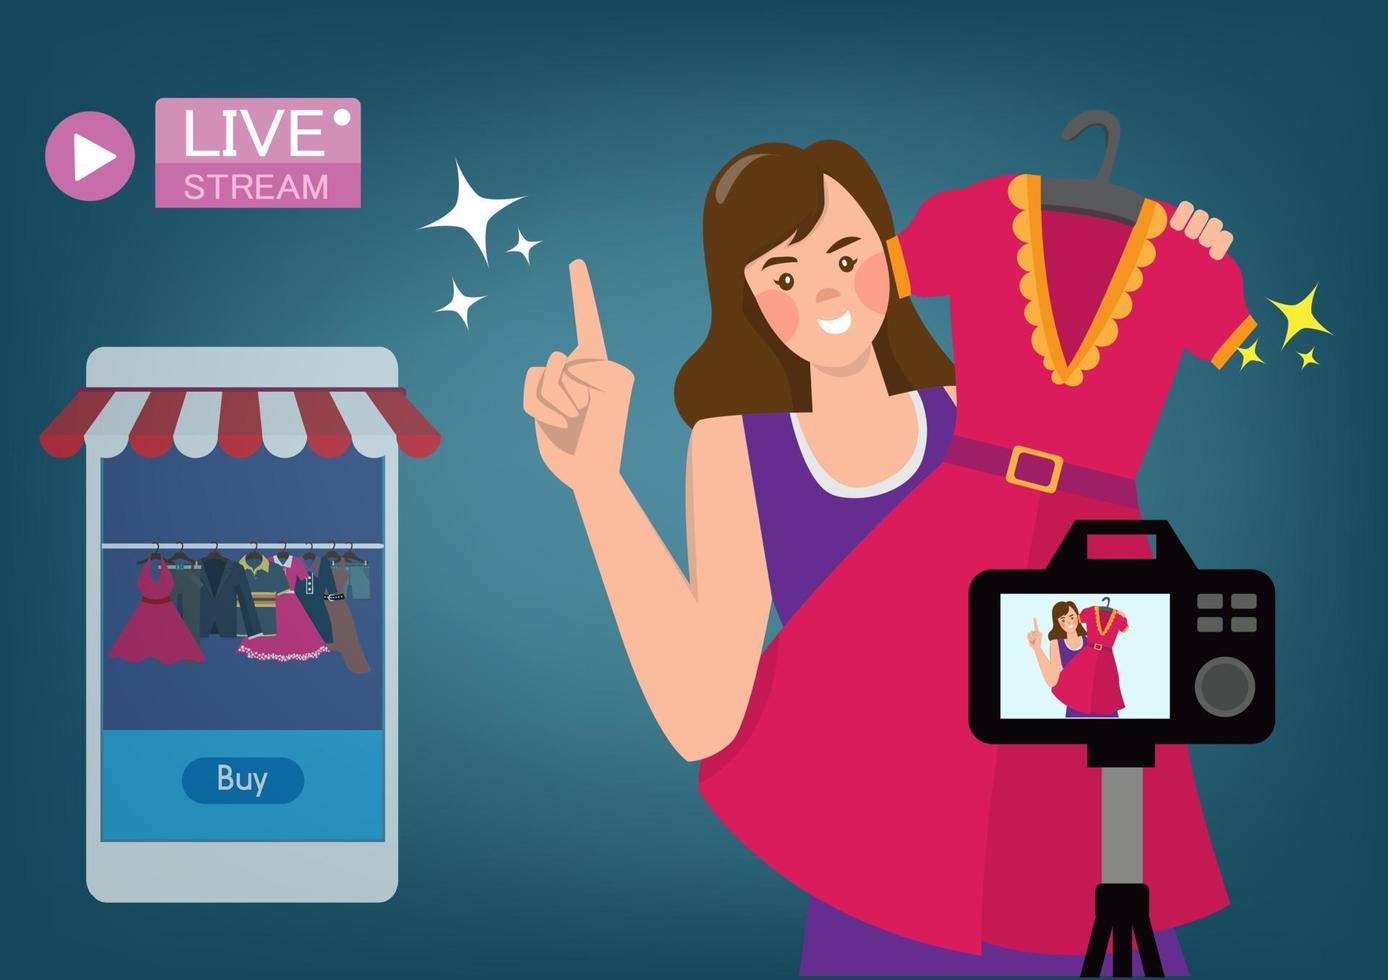 vrouwelijk karakter, streaming schepper home video blogger mode kleding vlogger kleding online winkelen inhoud vectorillustratie vector